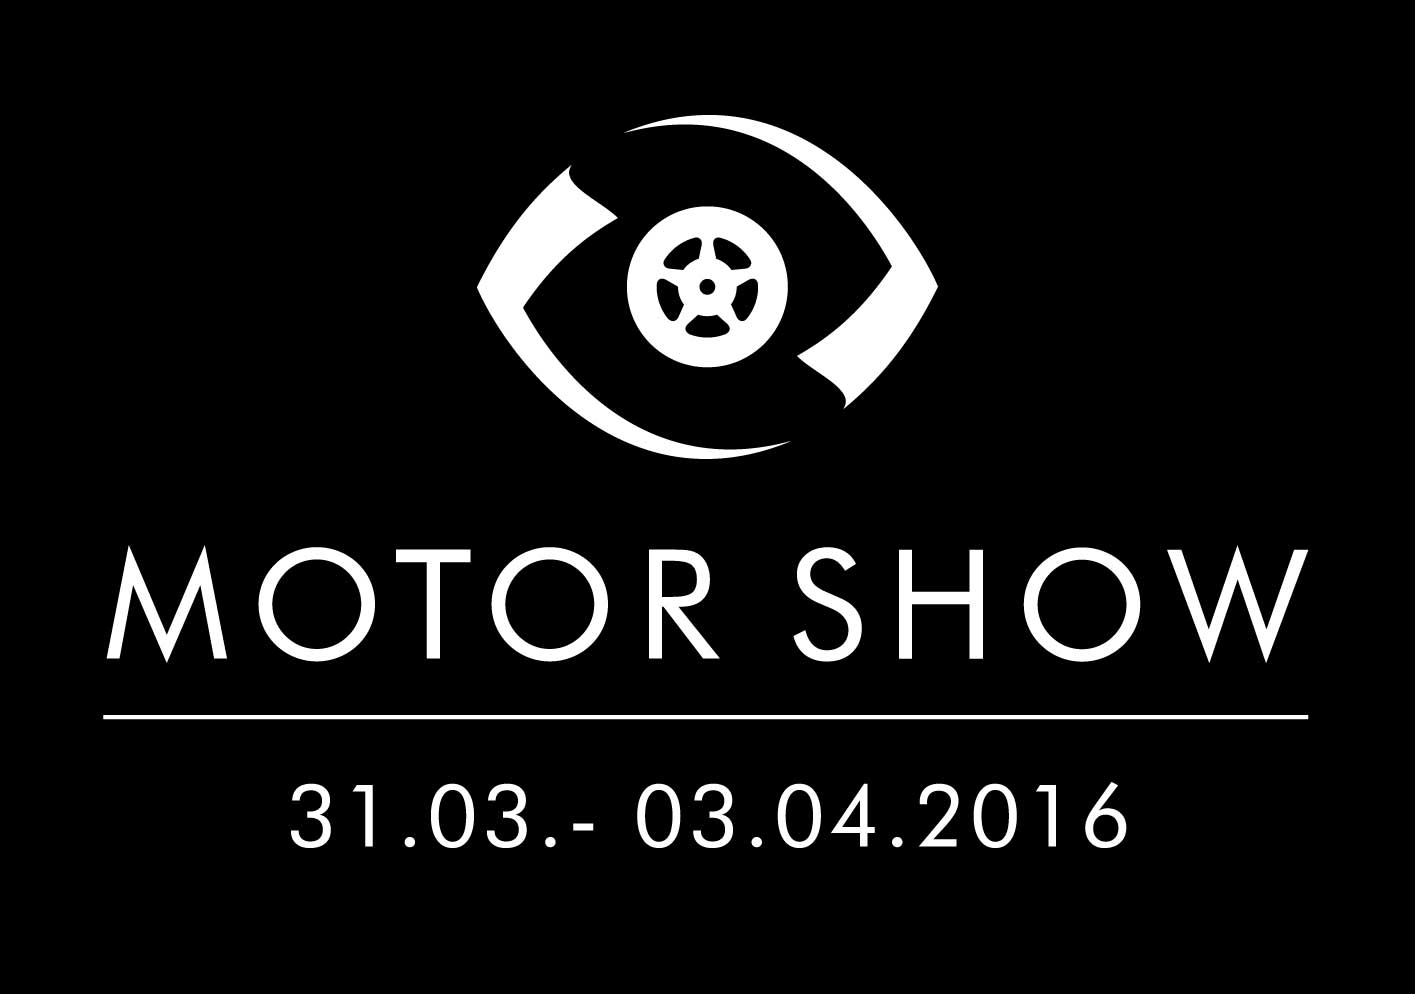 logo 2016 motorshow kontra1